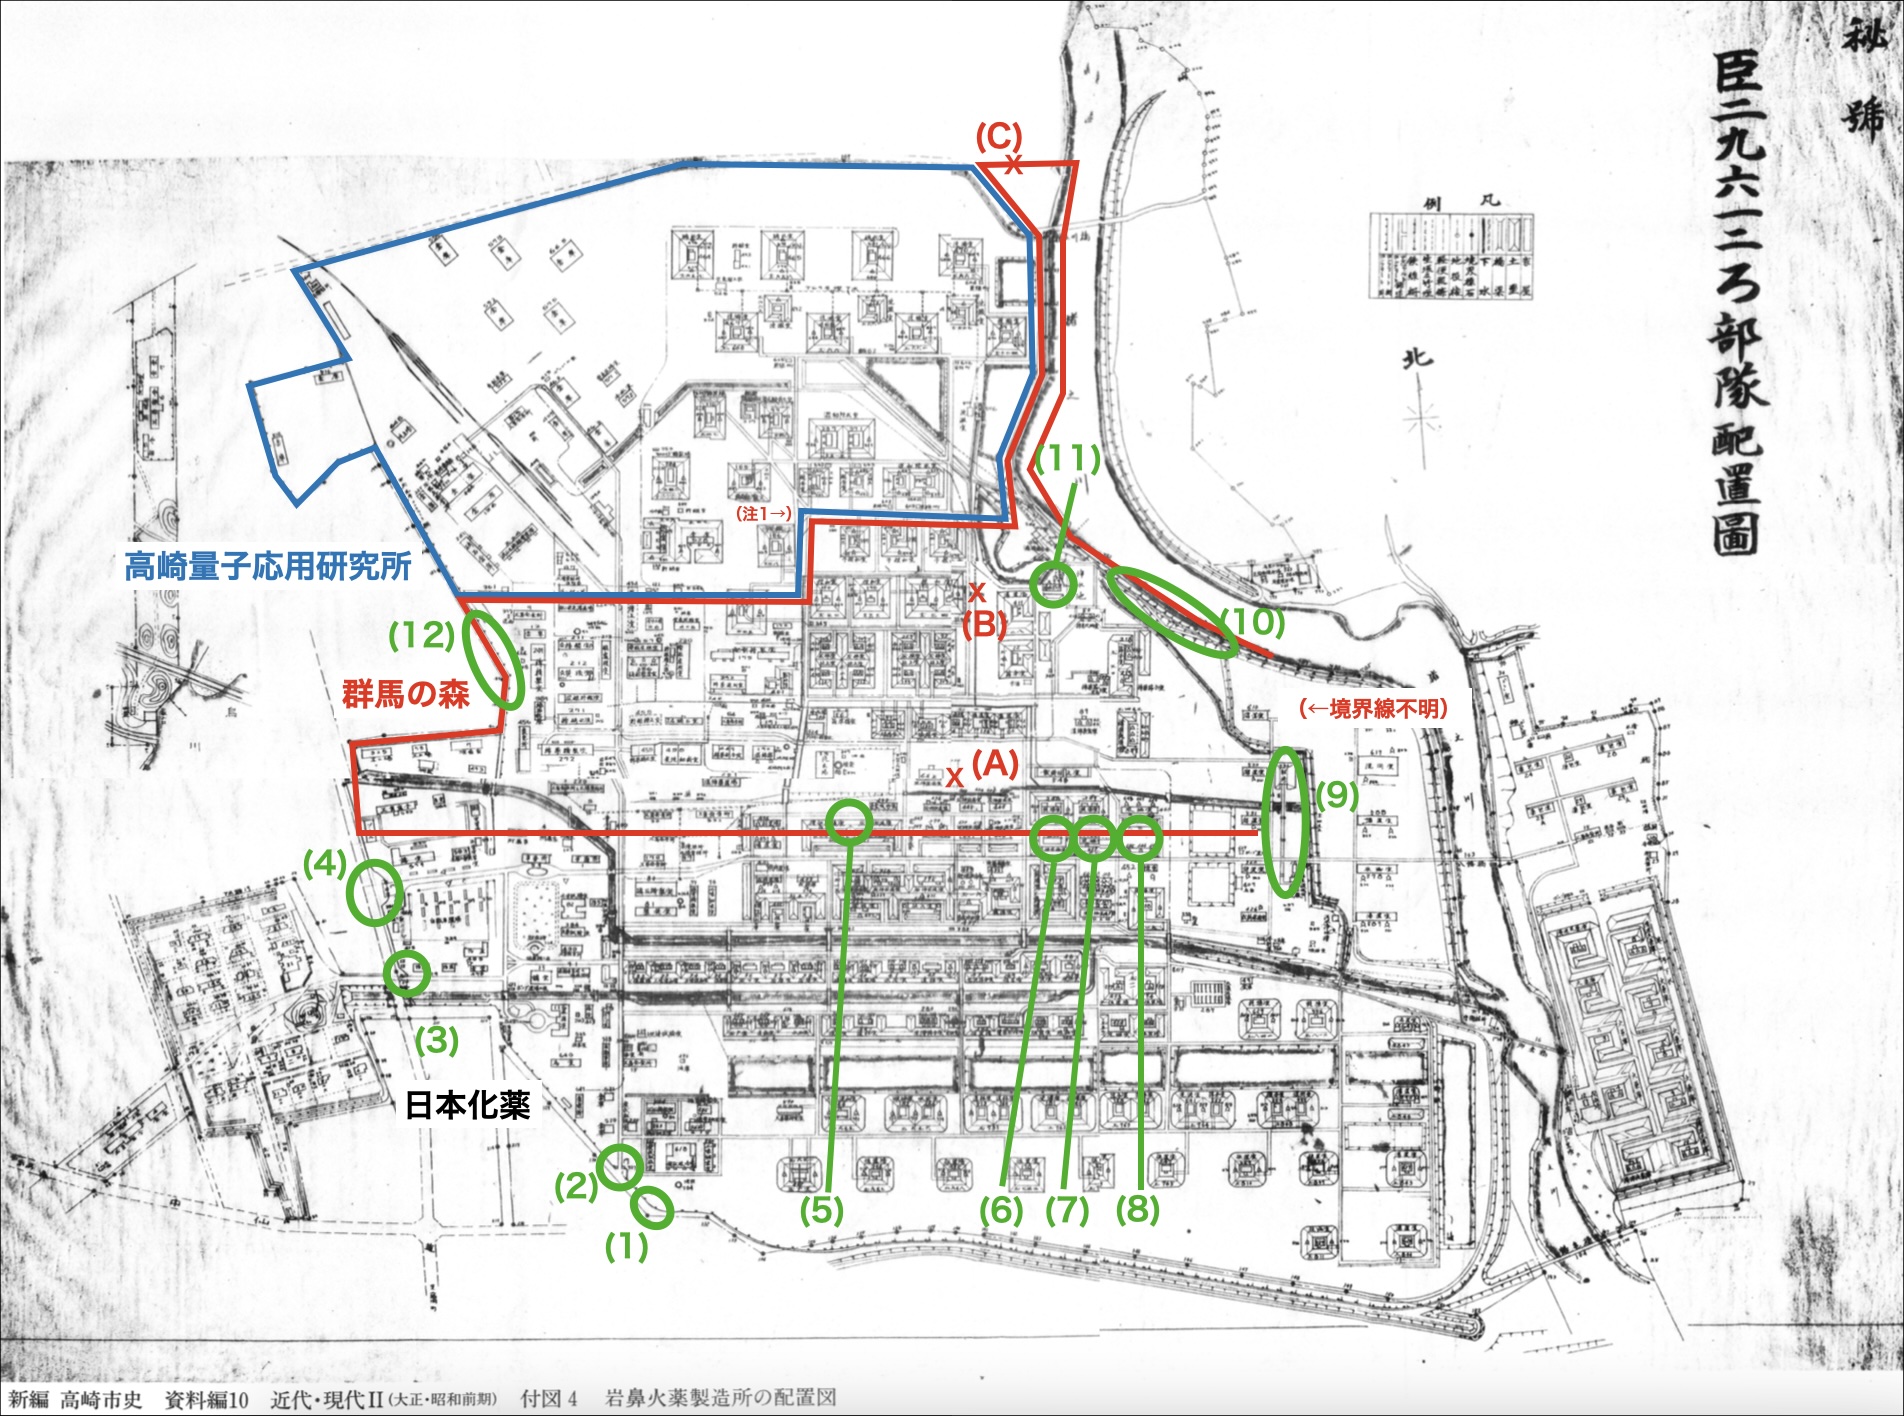 新編 高崎市史 資料編10「岩鼻火薬製造所の配置図」を加工